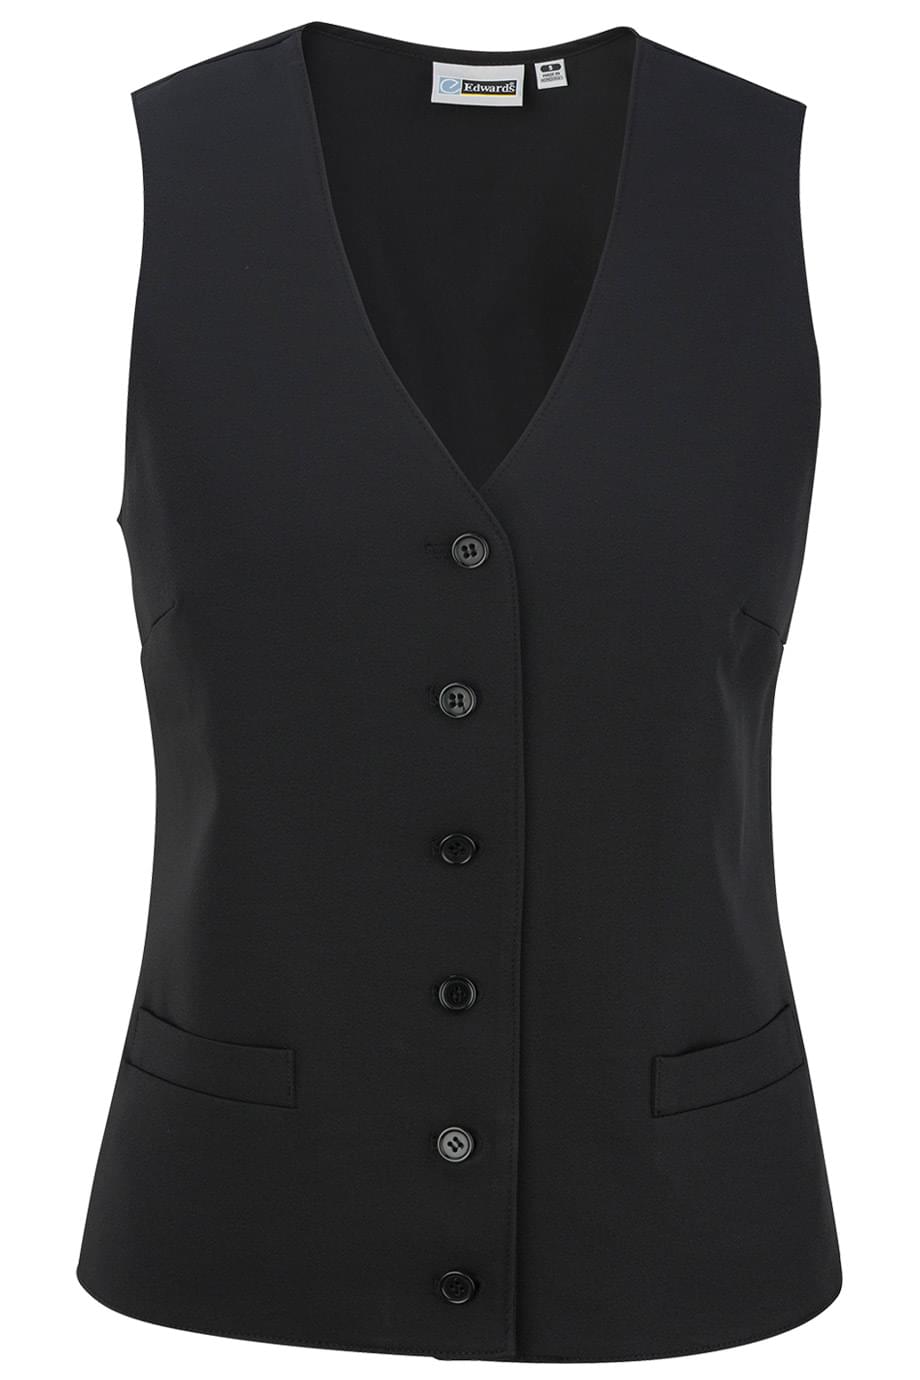 Ladies' Firenza™ Vest. 7550